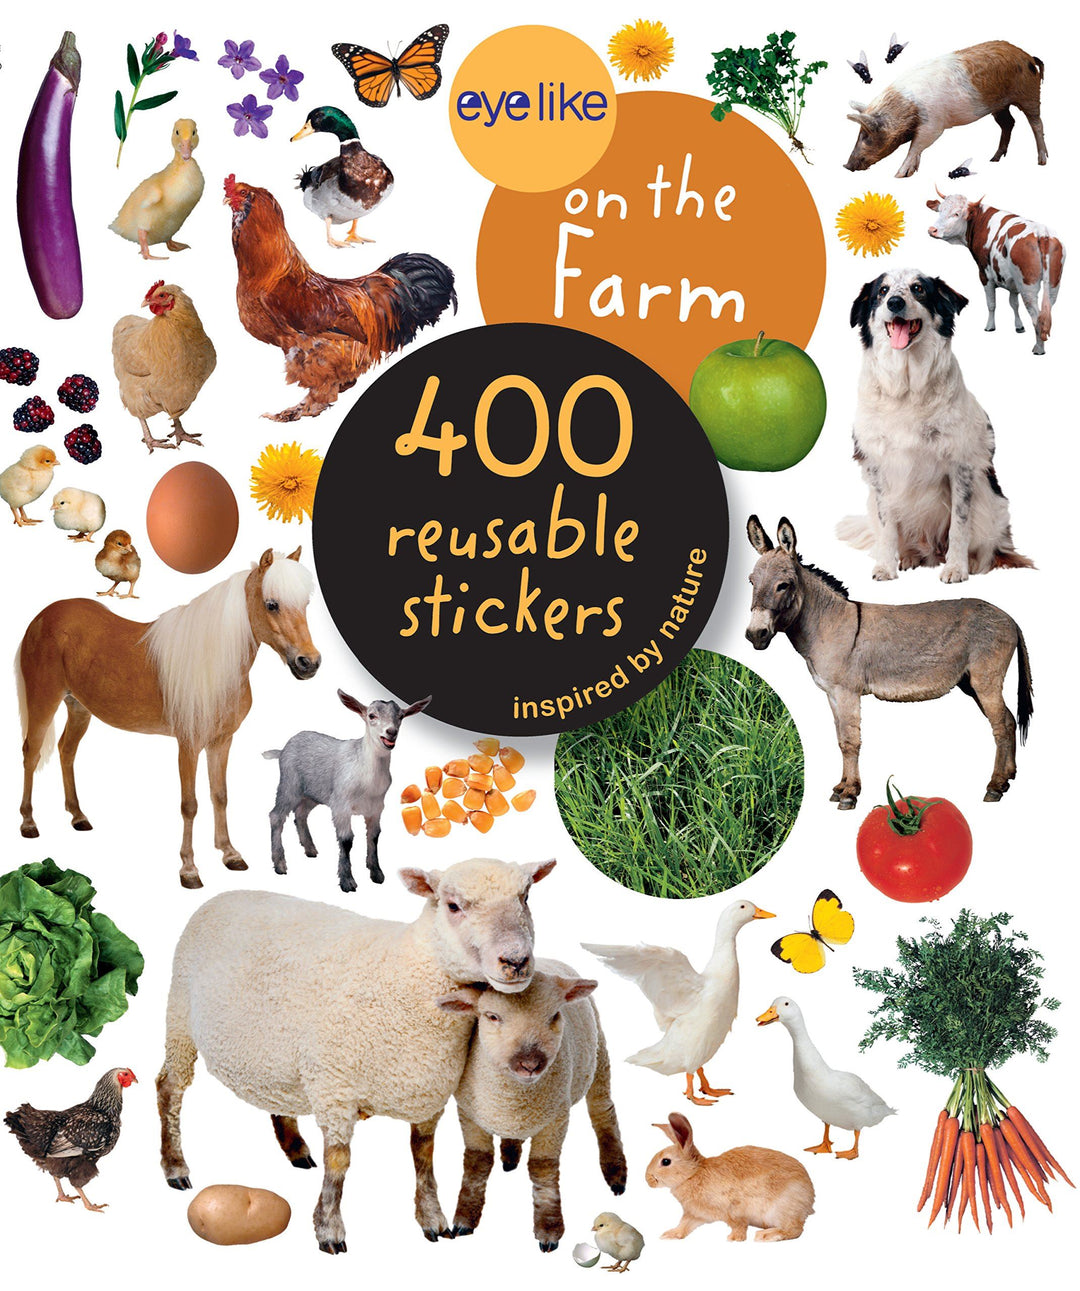 Eyelike On the farm - 400 Reusable Stickers